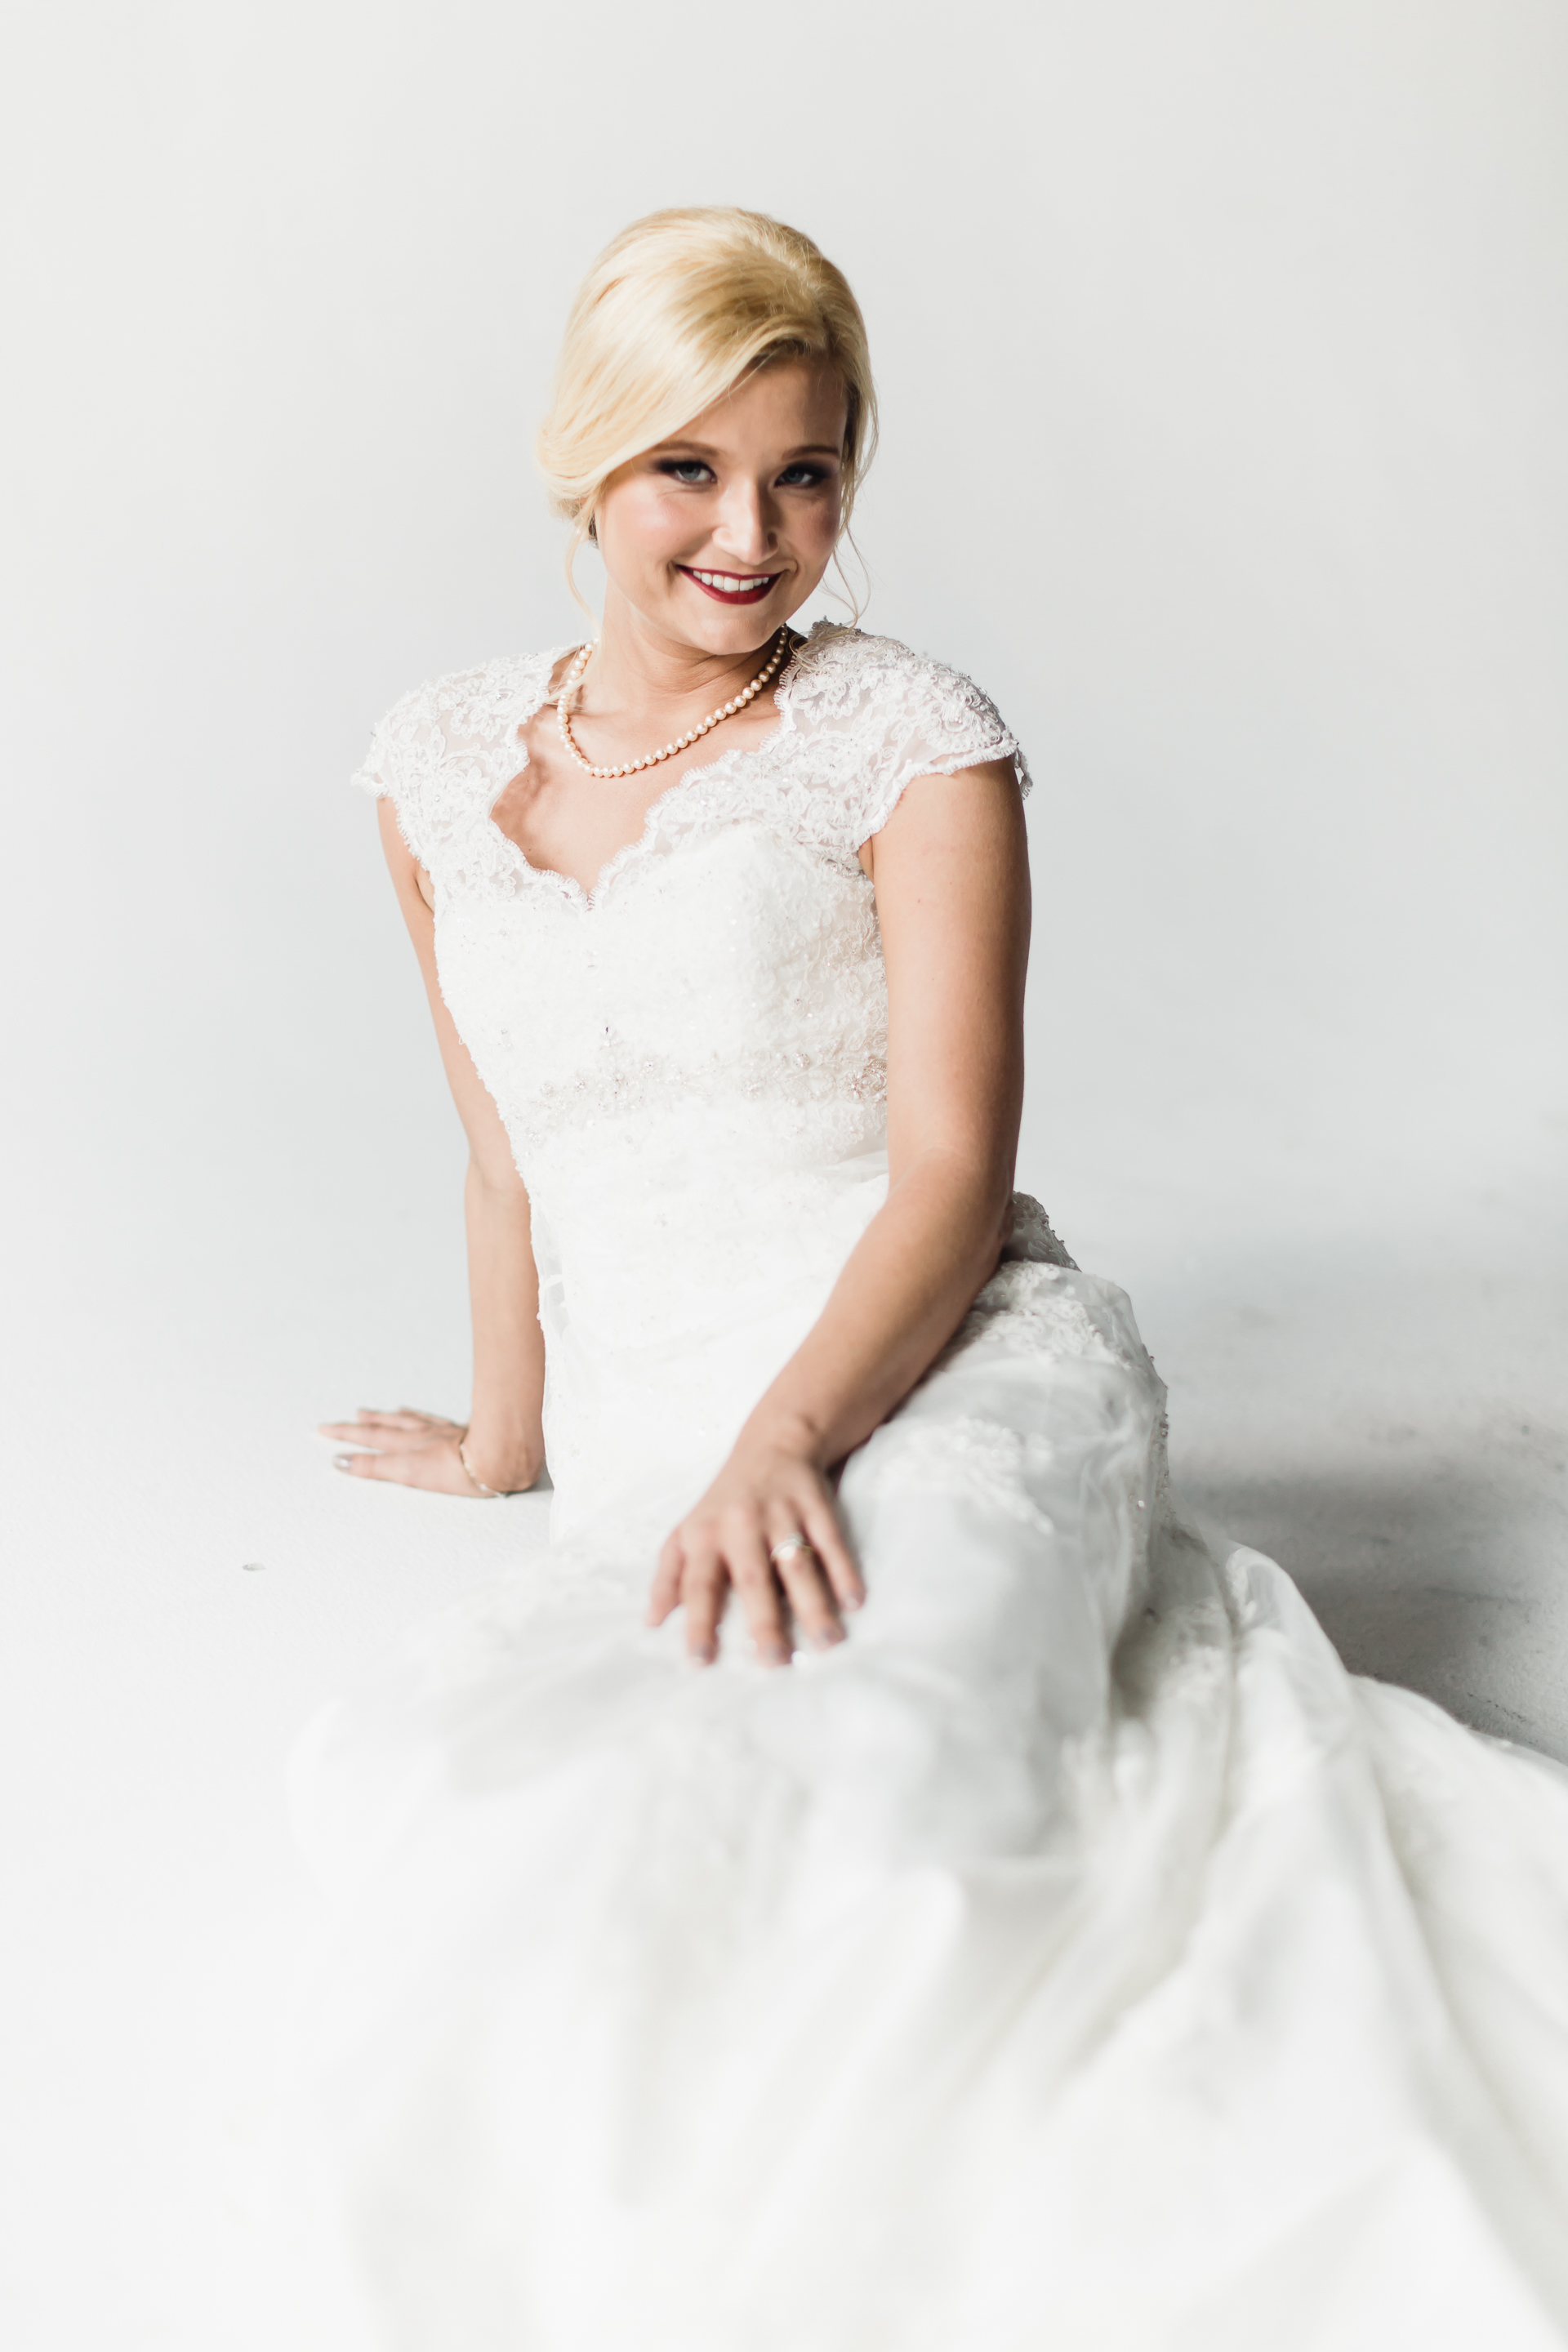 Gianna Keiko Atlanta NYC Brooklyn Hamptons Wedding Bridal Photographer-24.jpg